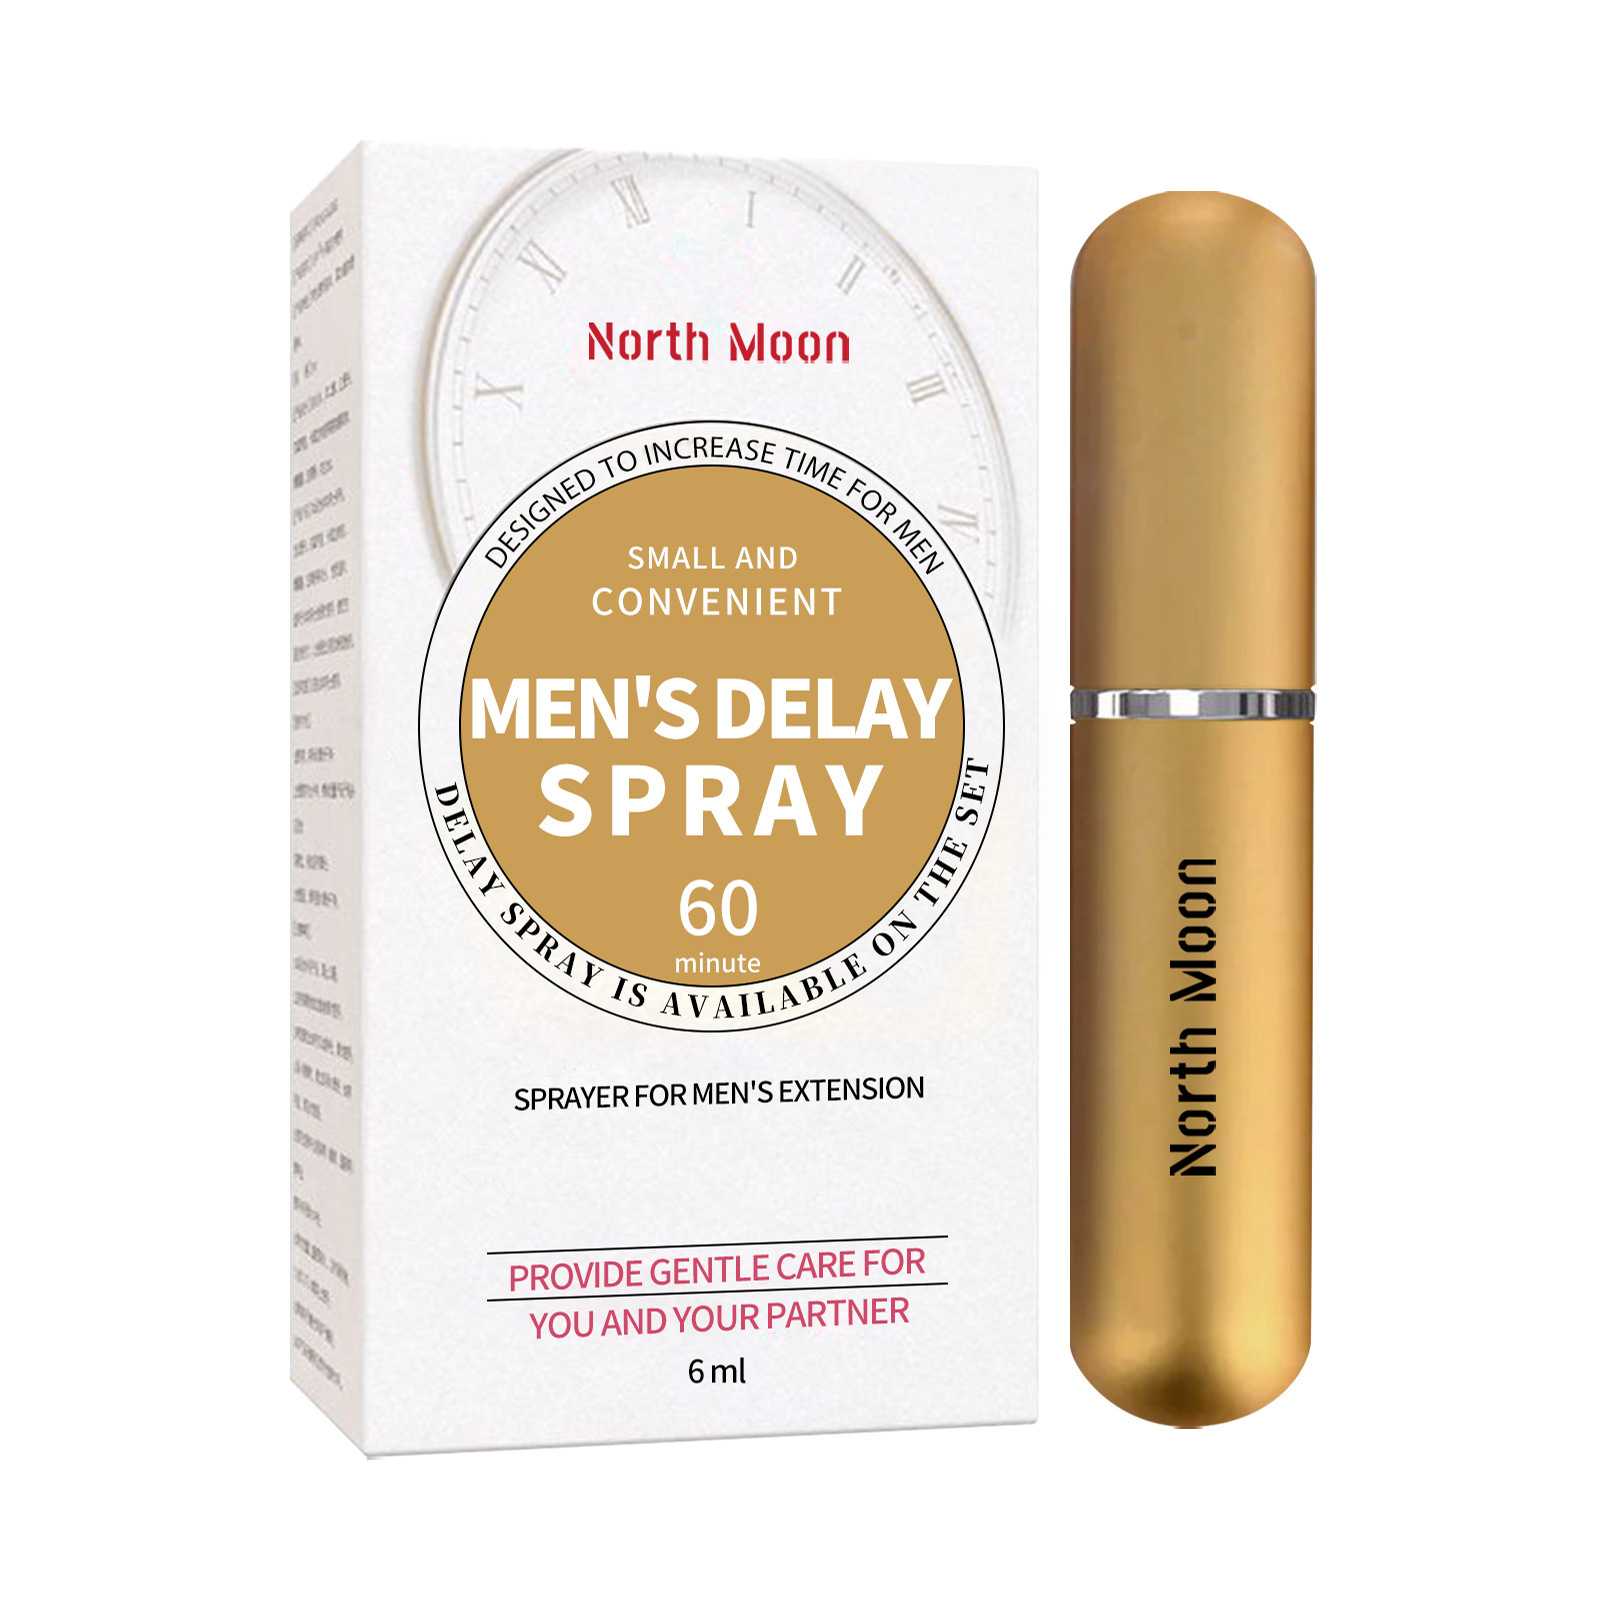 North Moon Male Care Spray